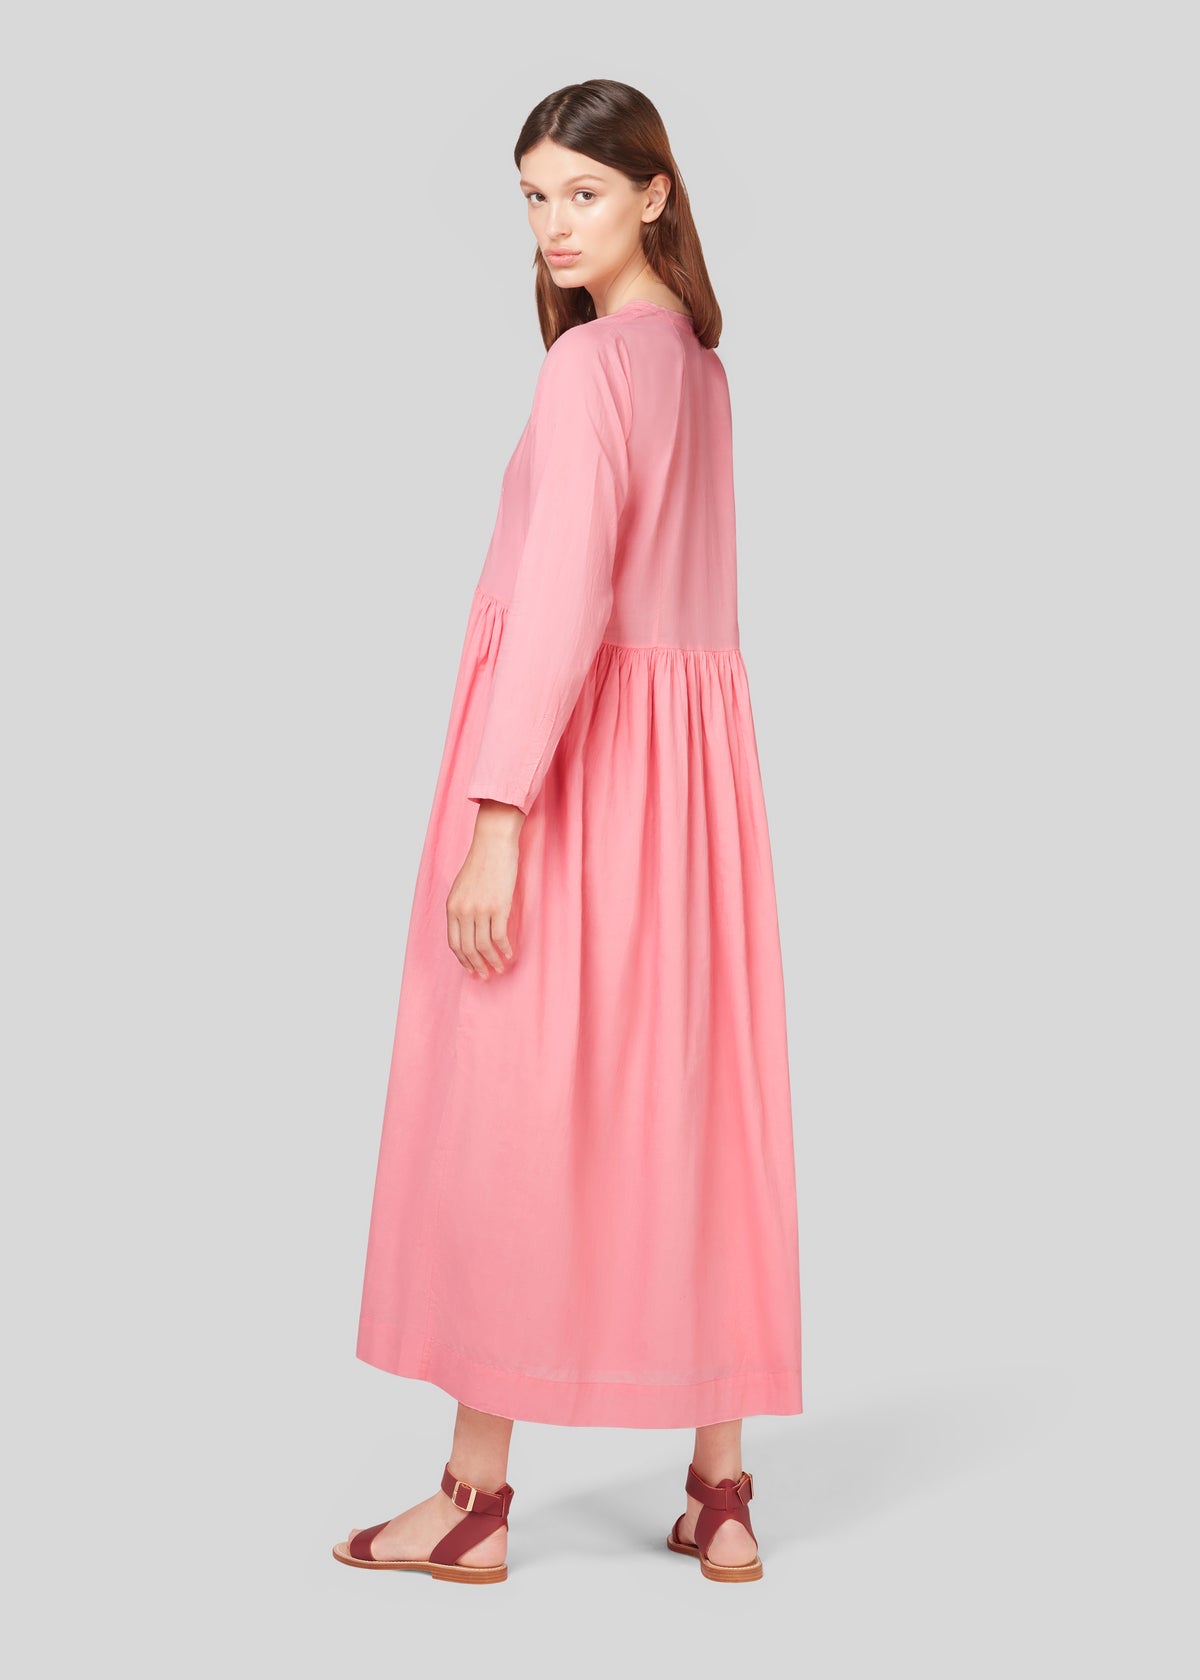 ARUM DRESS —  ROSE JAIPUR by Aimé